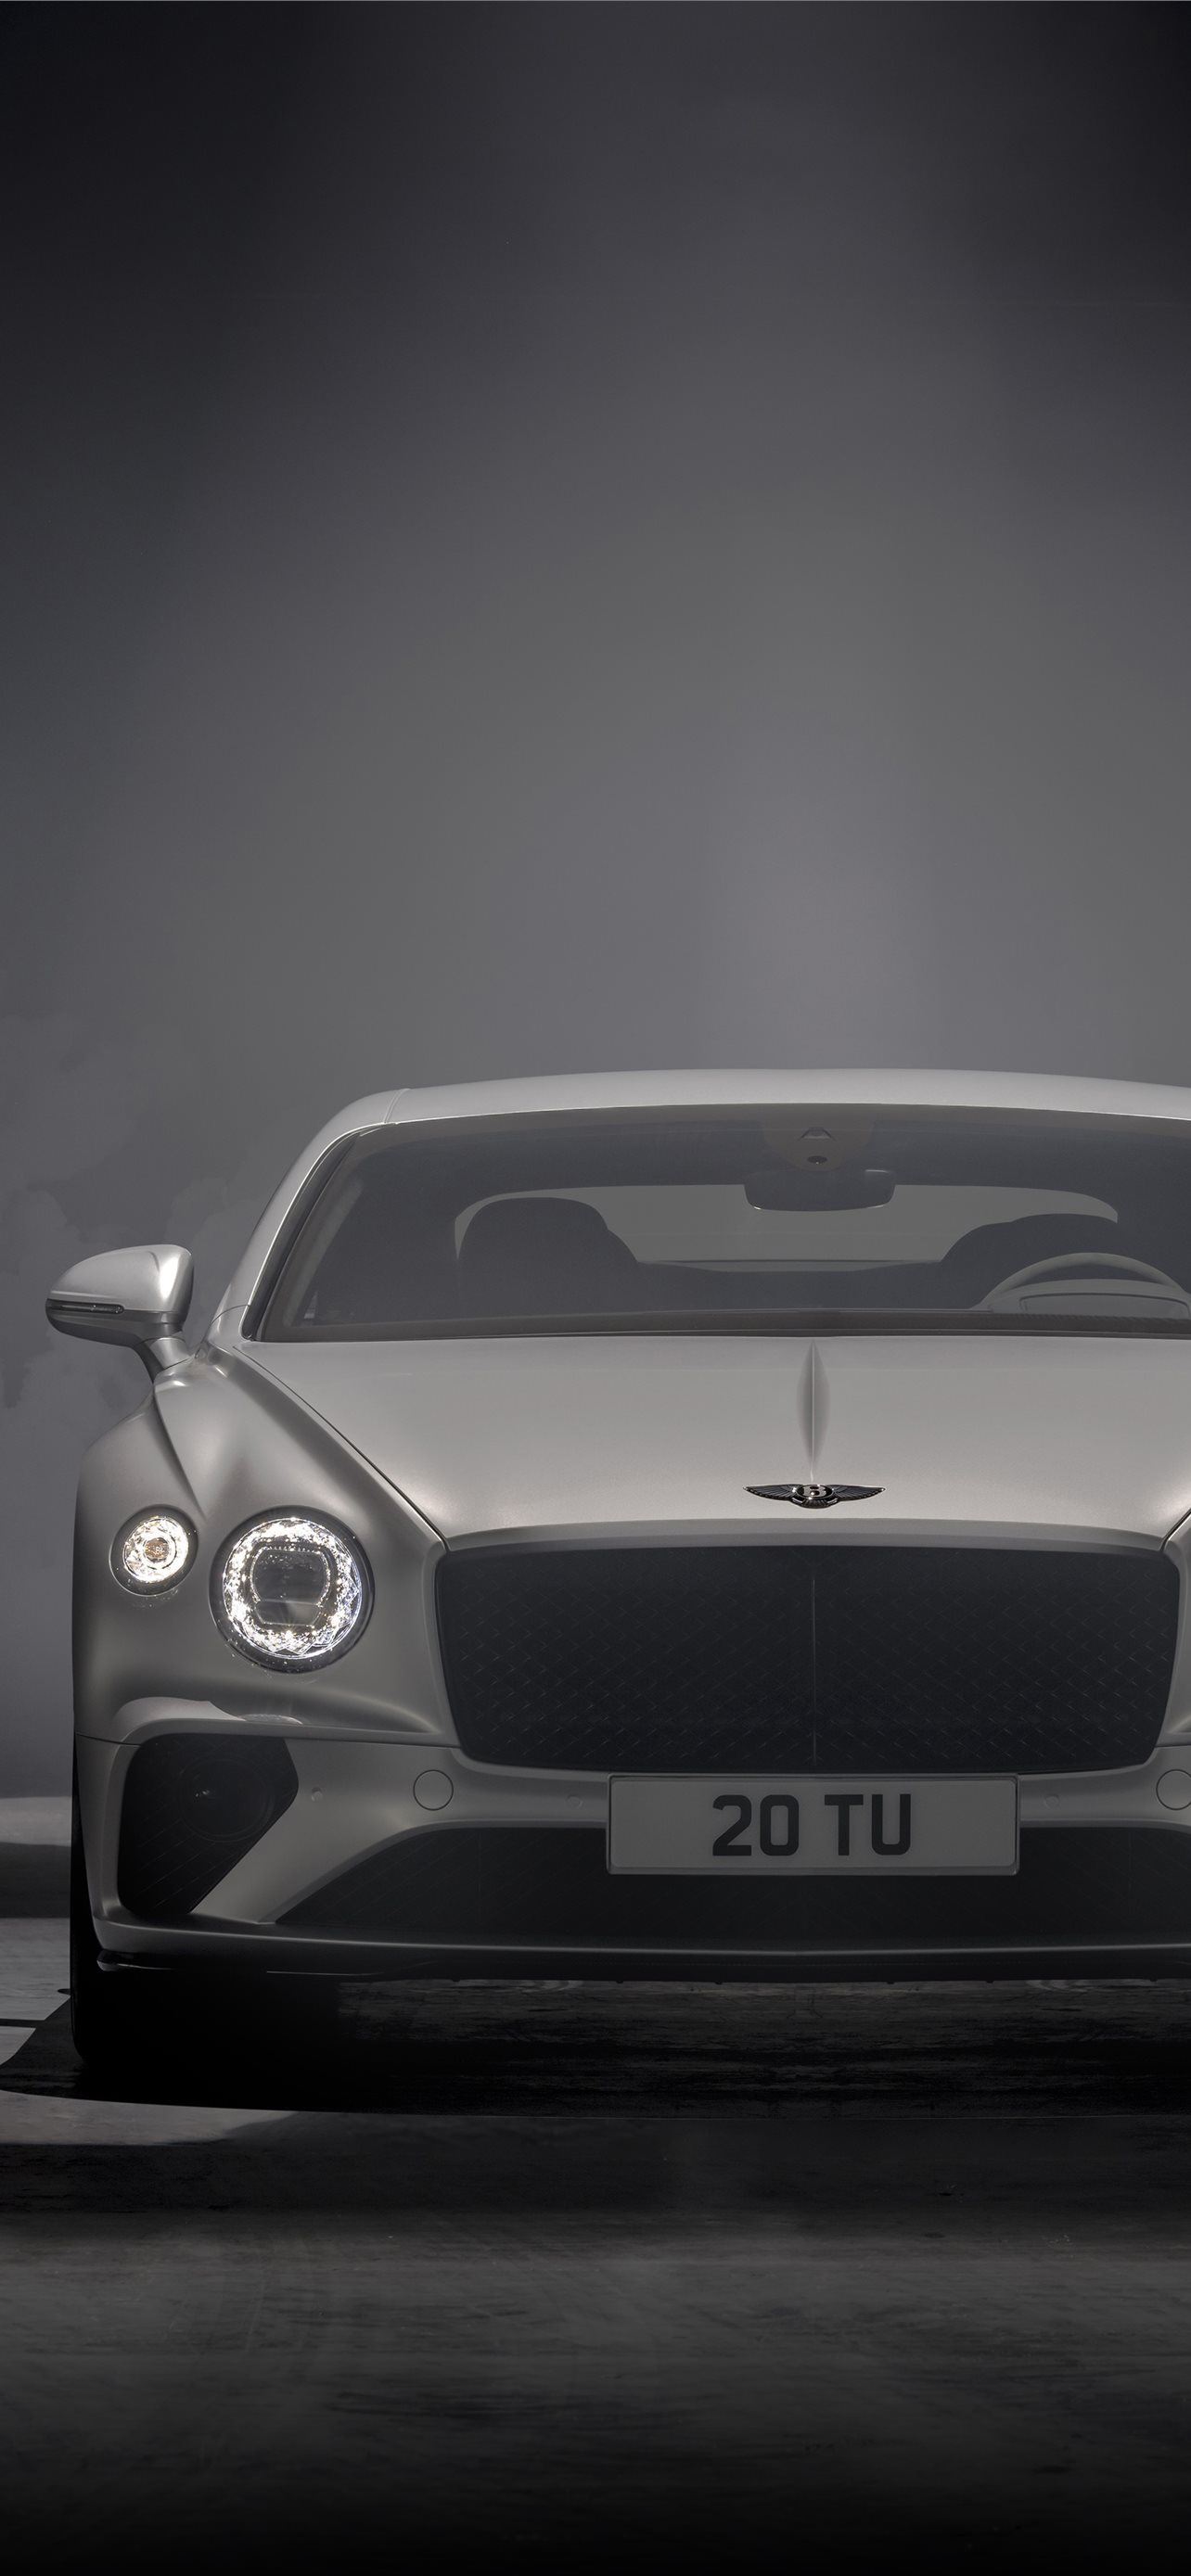 Bentley Continental Gt Speed Iphone Wallpapers Free Download